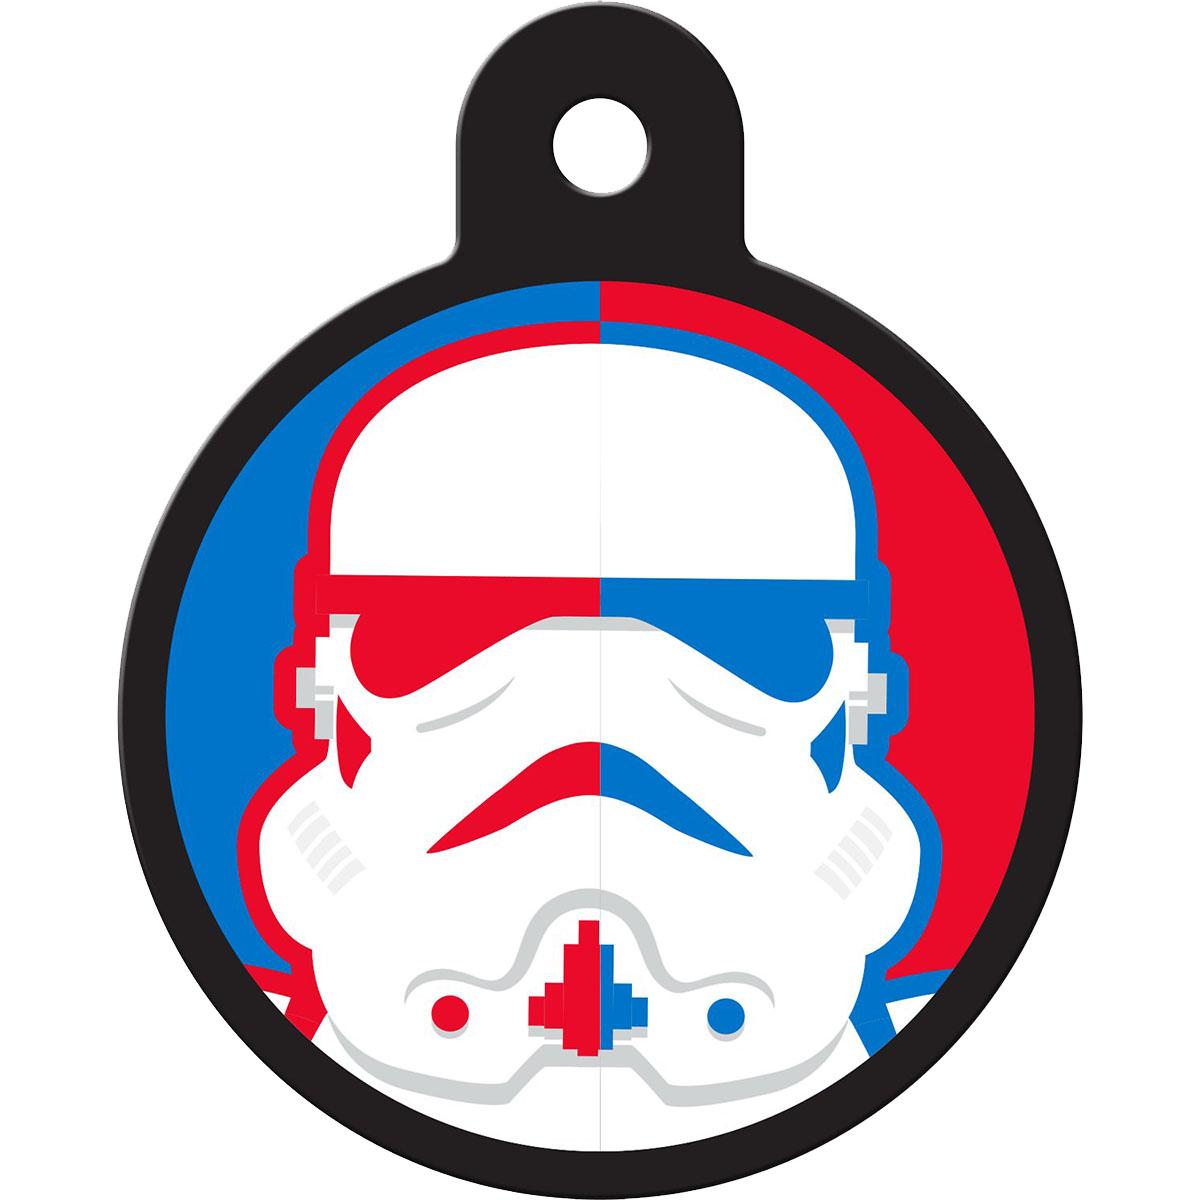 Star Wars Large Circle Engravable Pet I.D. Tag - Storm Trooper Red/Blue